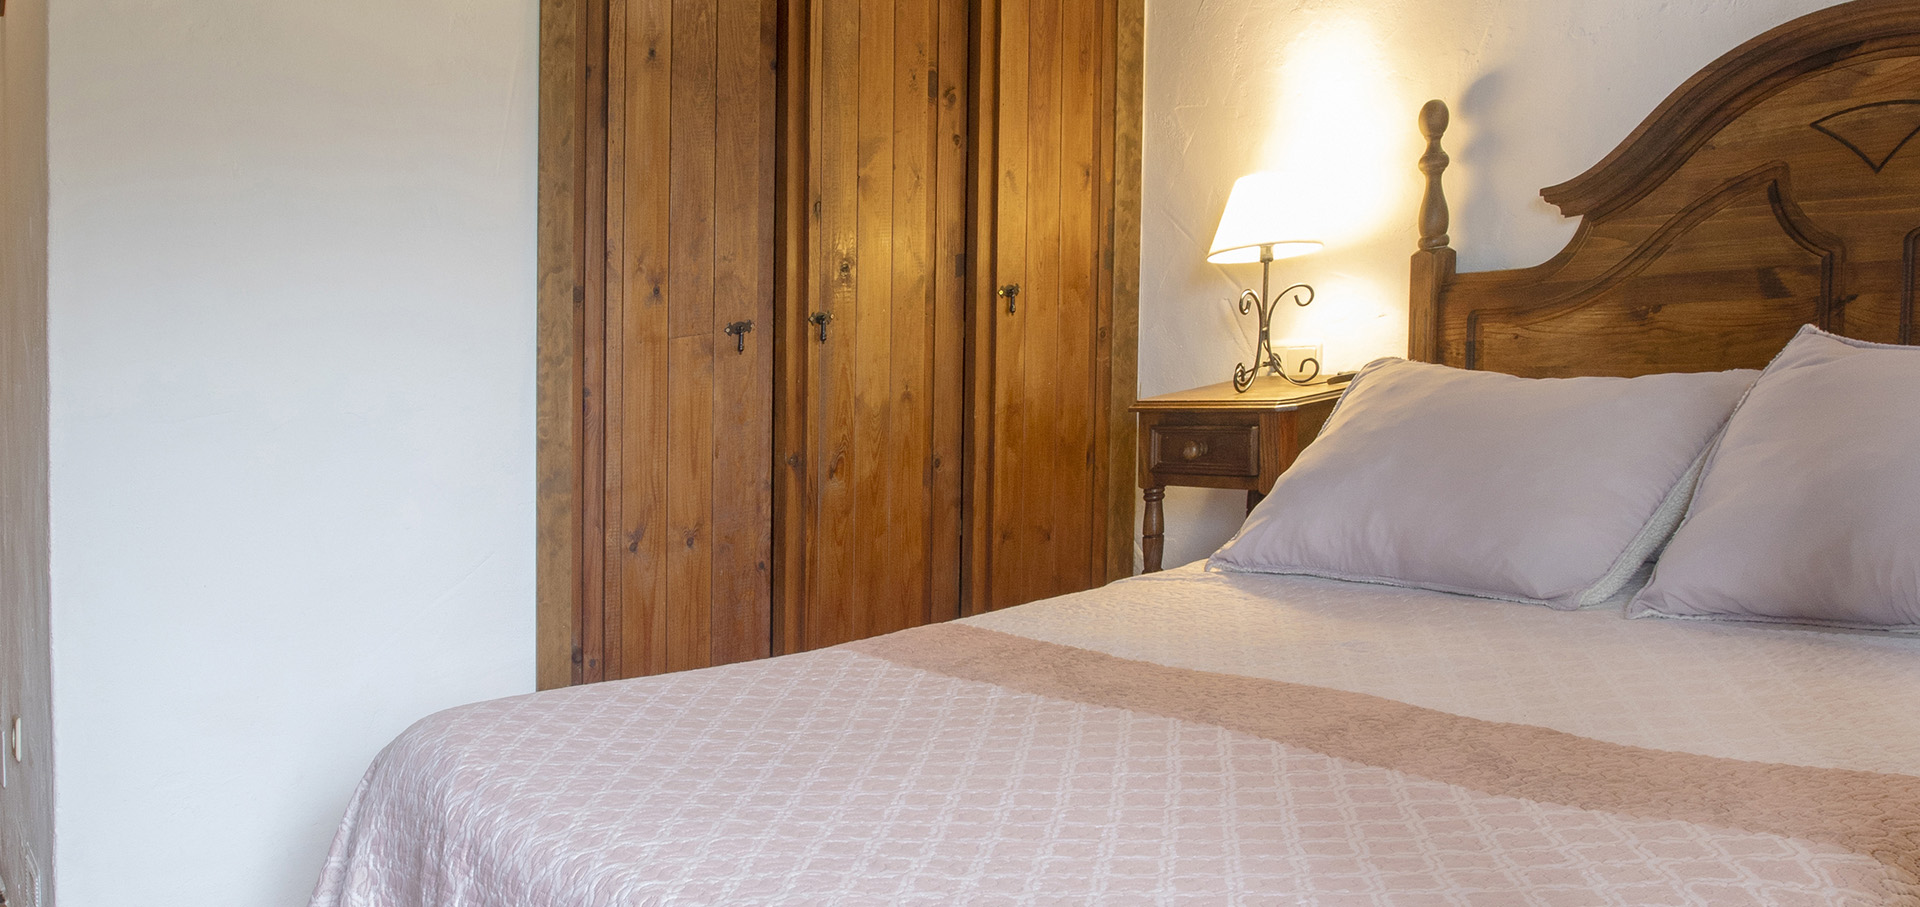 hotel rural asturias encanto habitacion doble galeria Ventolin cab 1